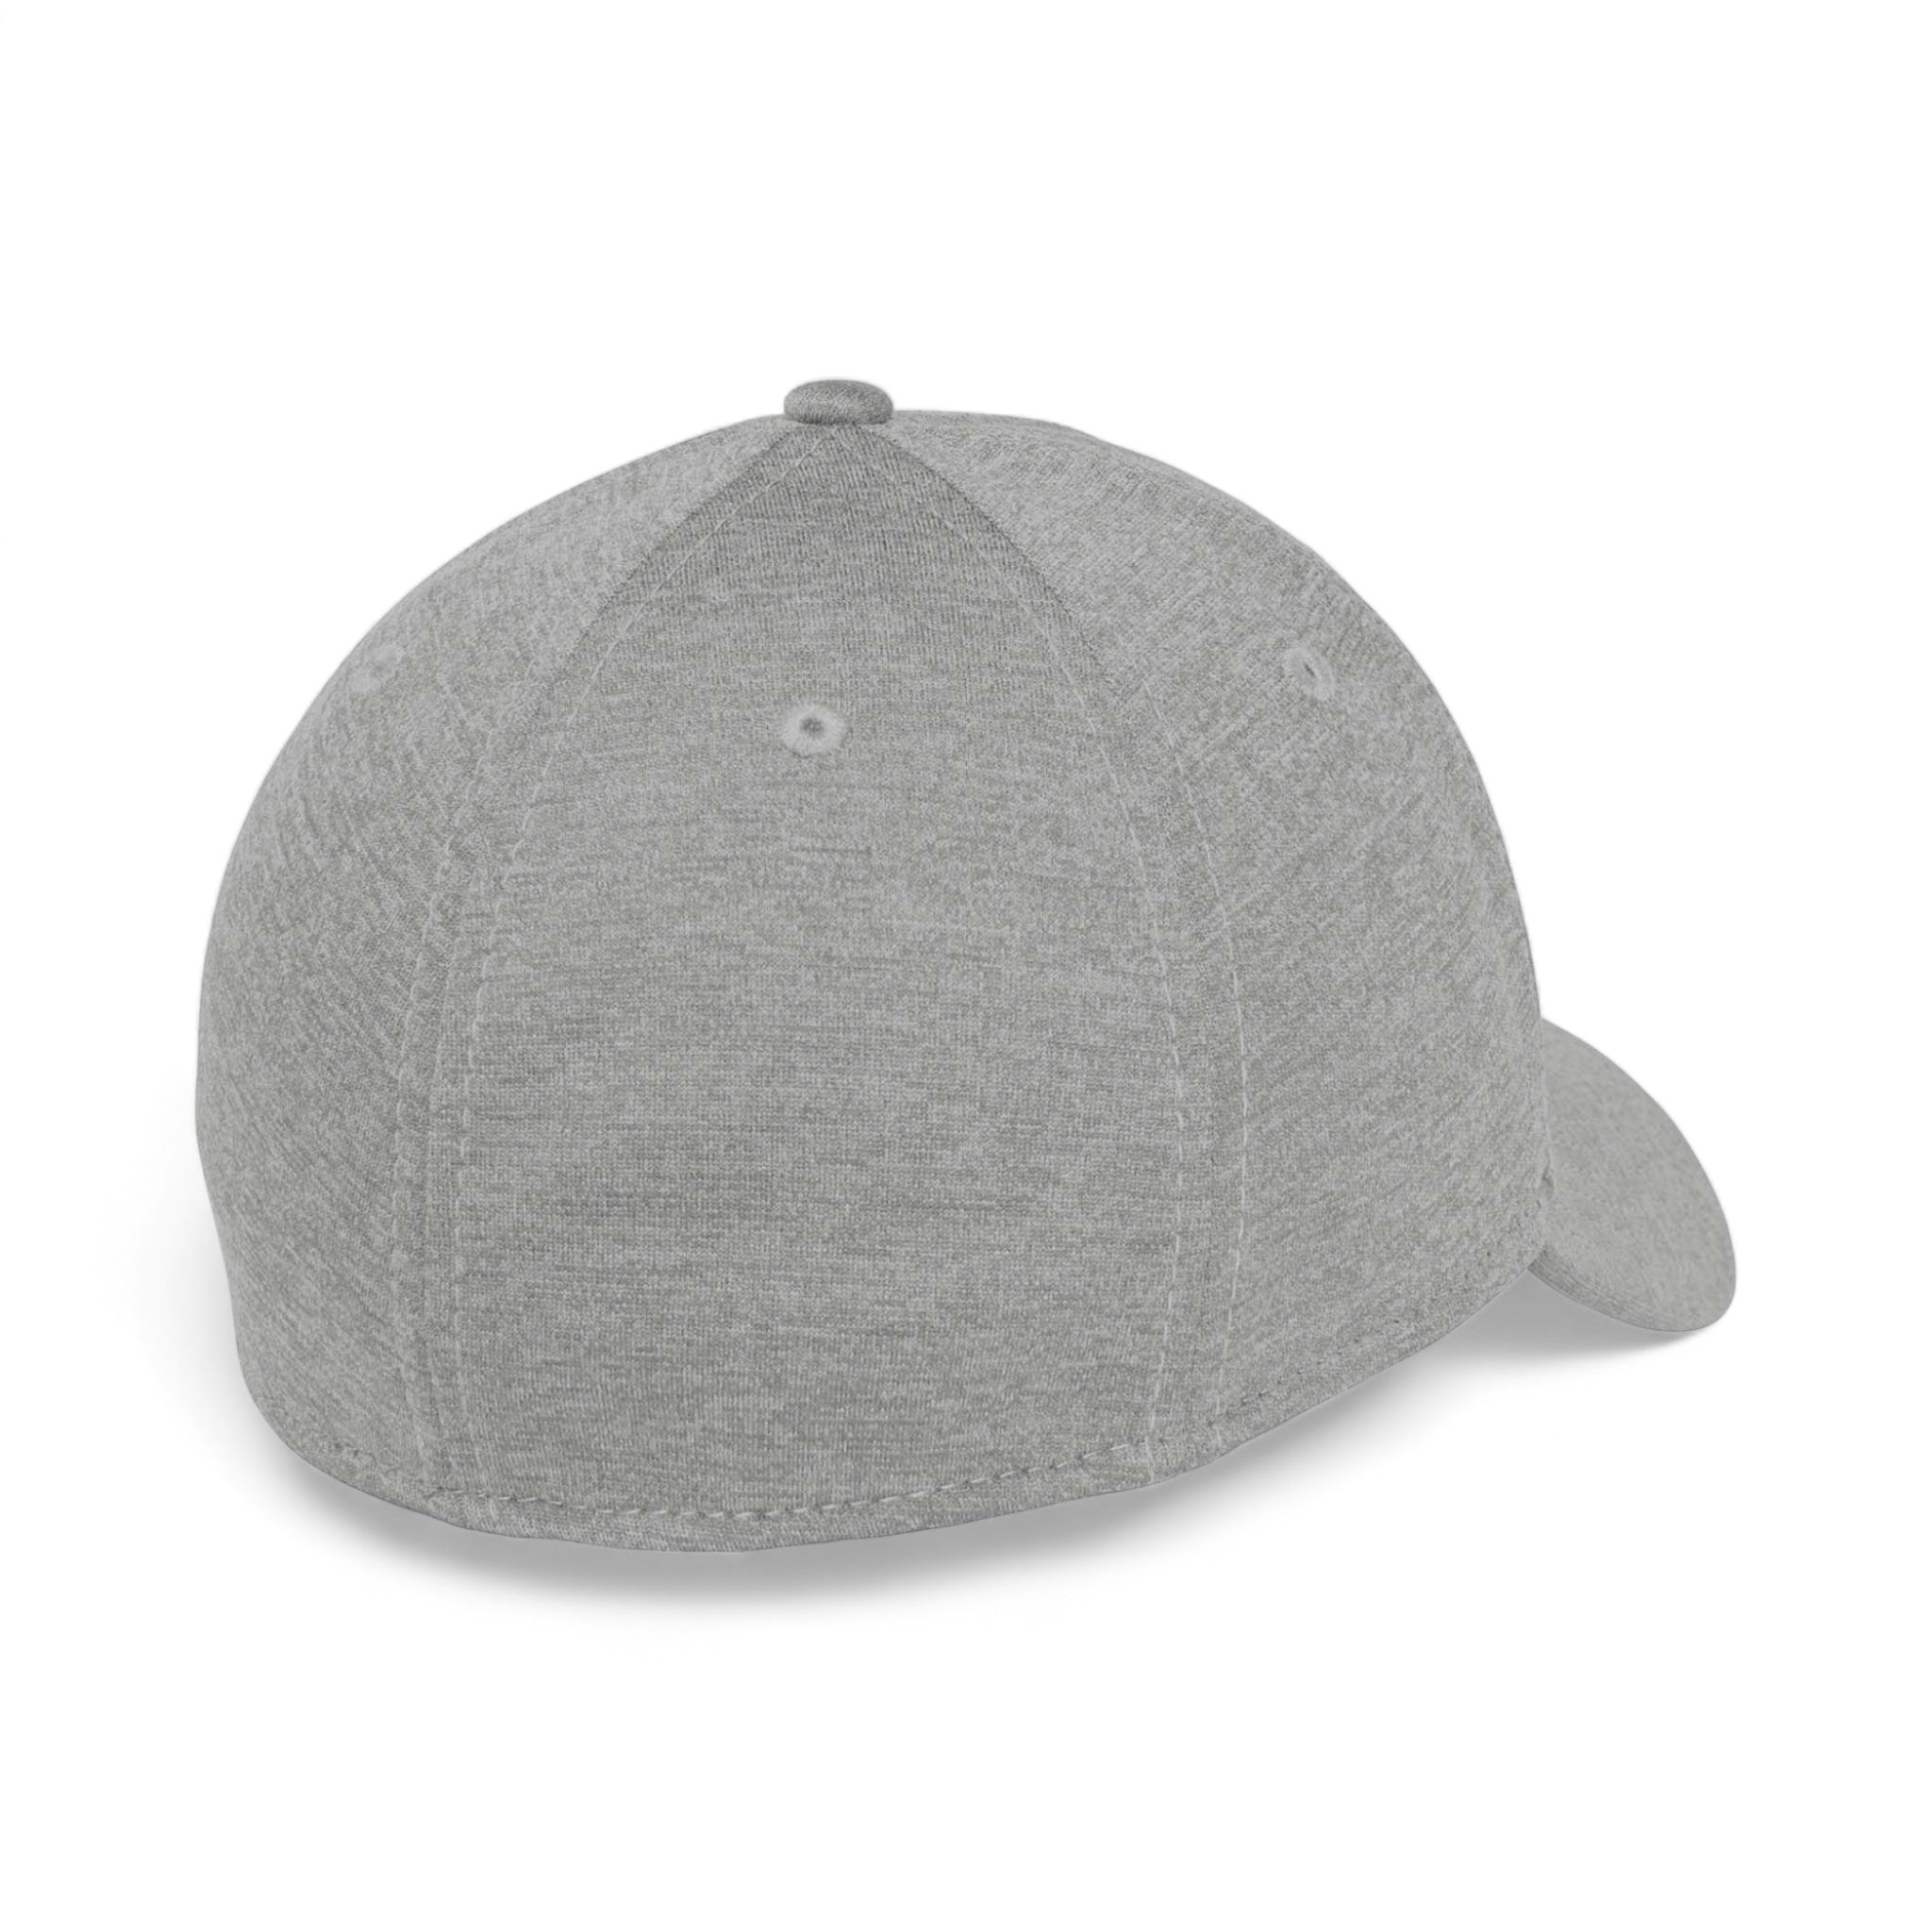 Back view of New Era NE703 custom hat in grey shadow heather